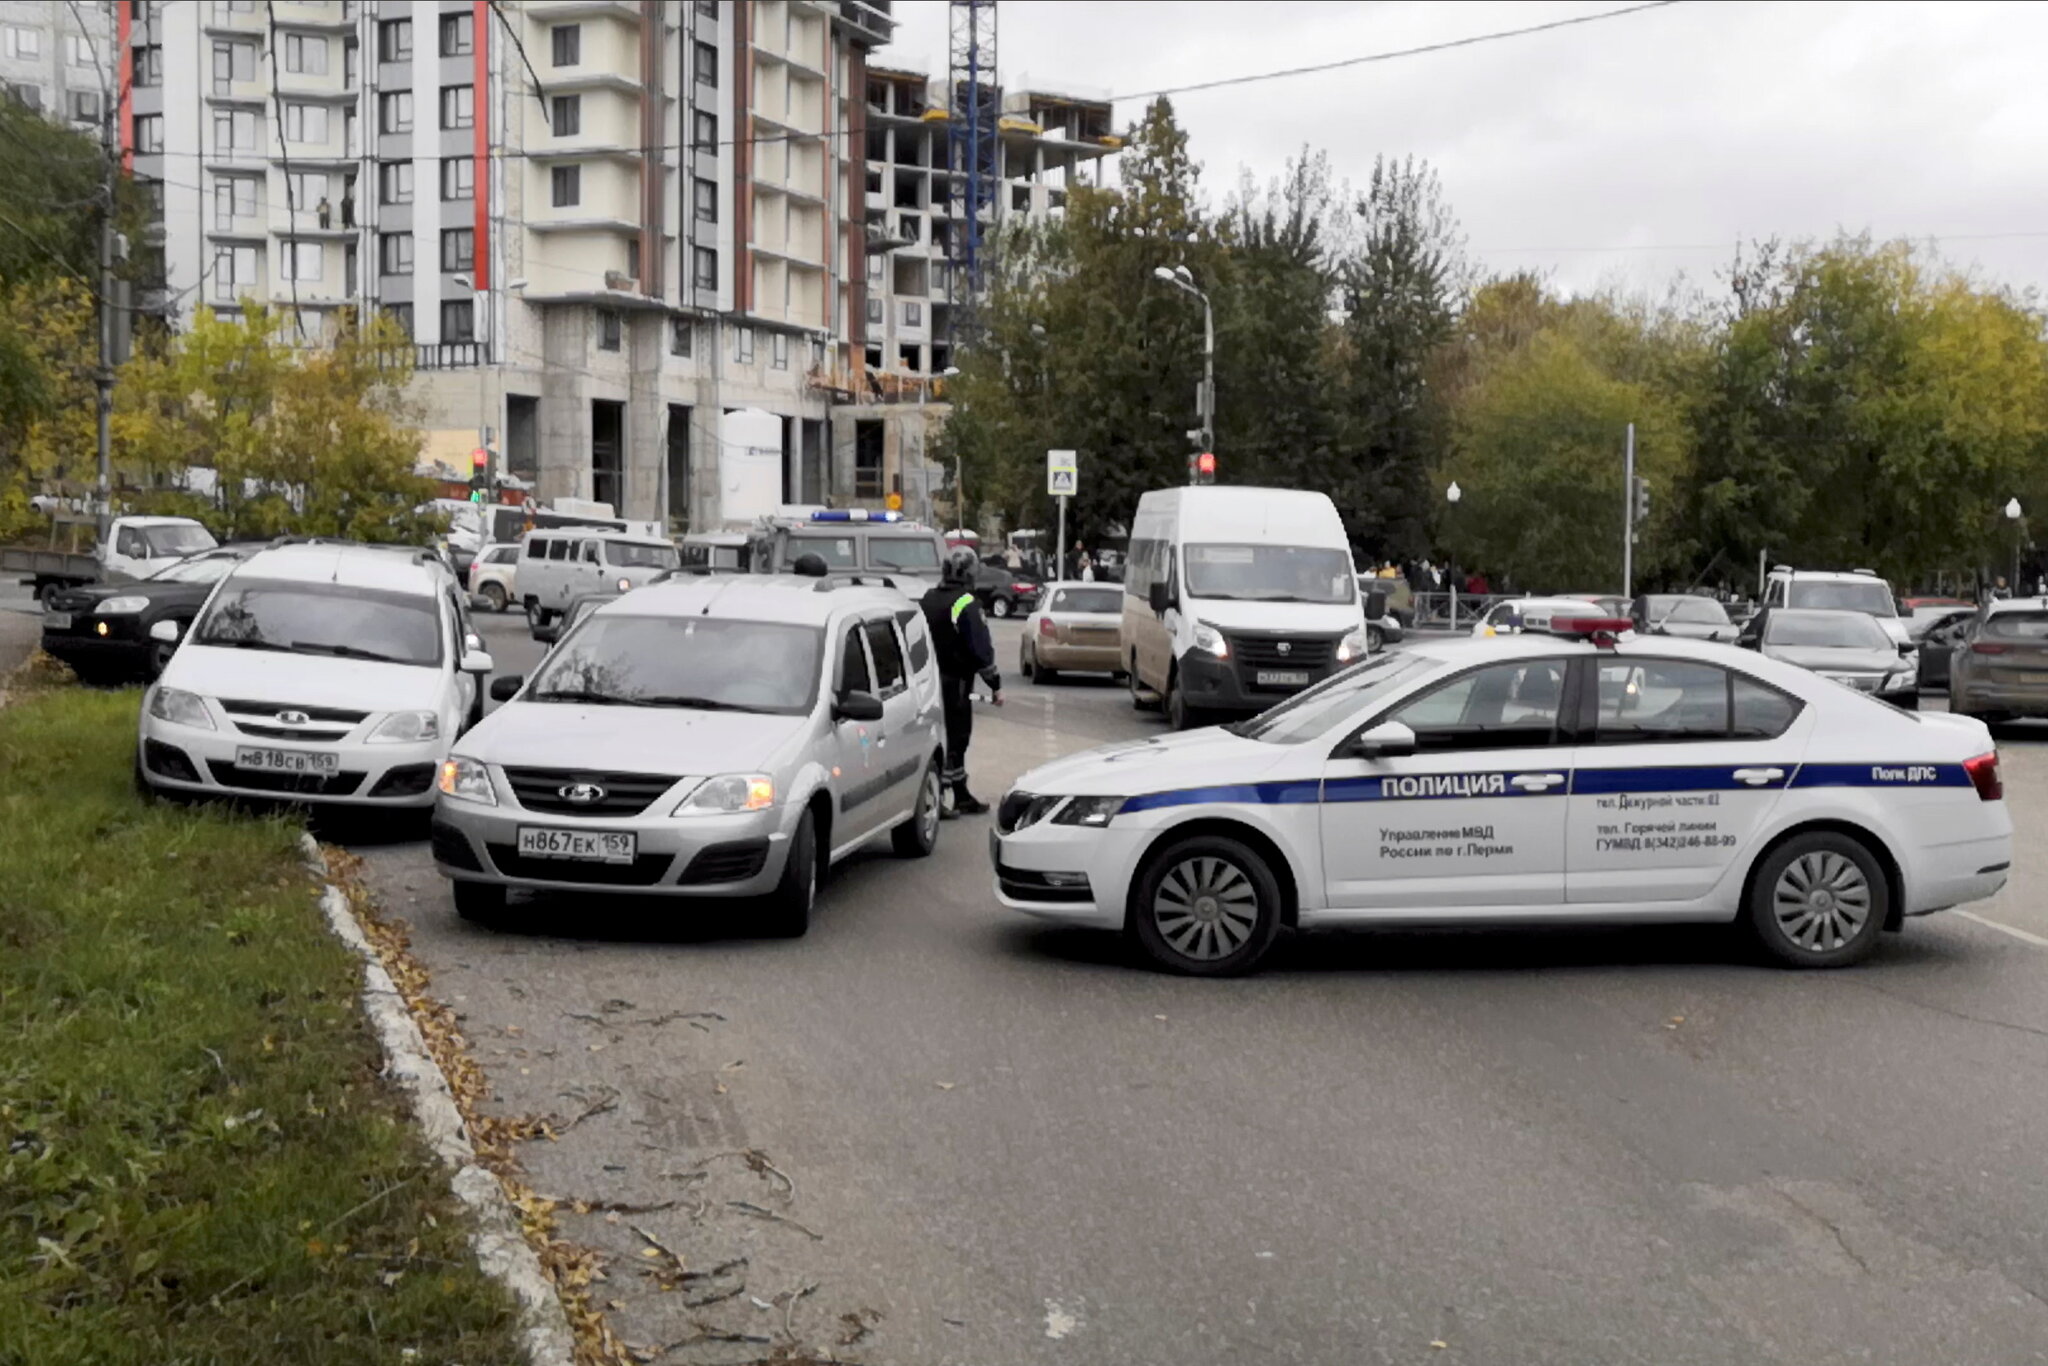 Gunman Kills Eight at Russian University